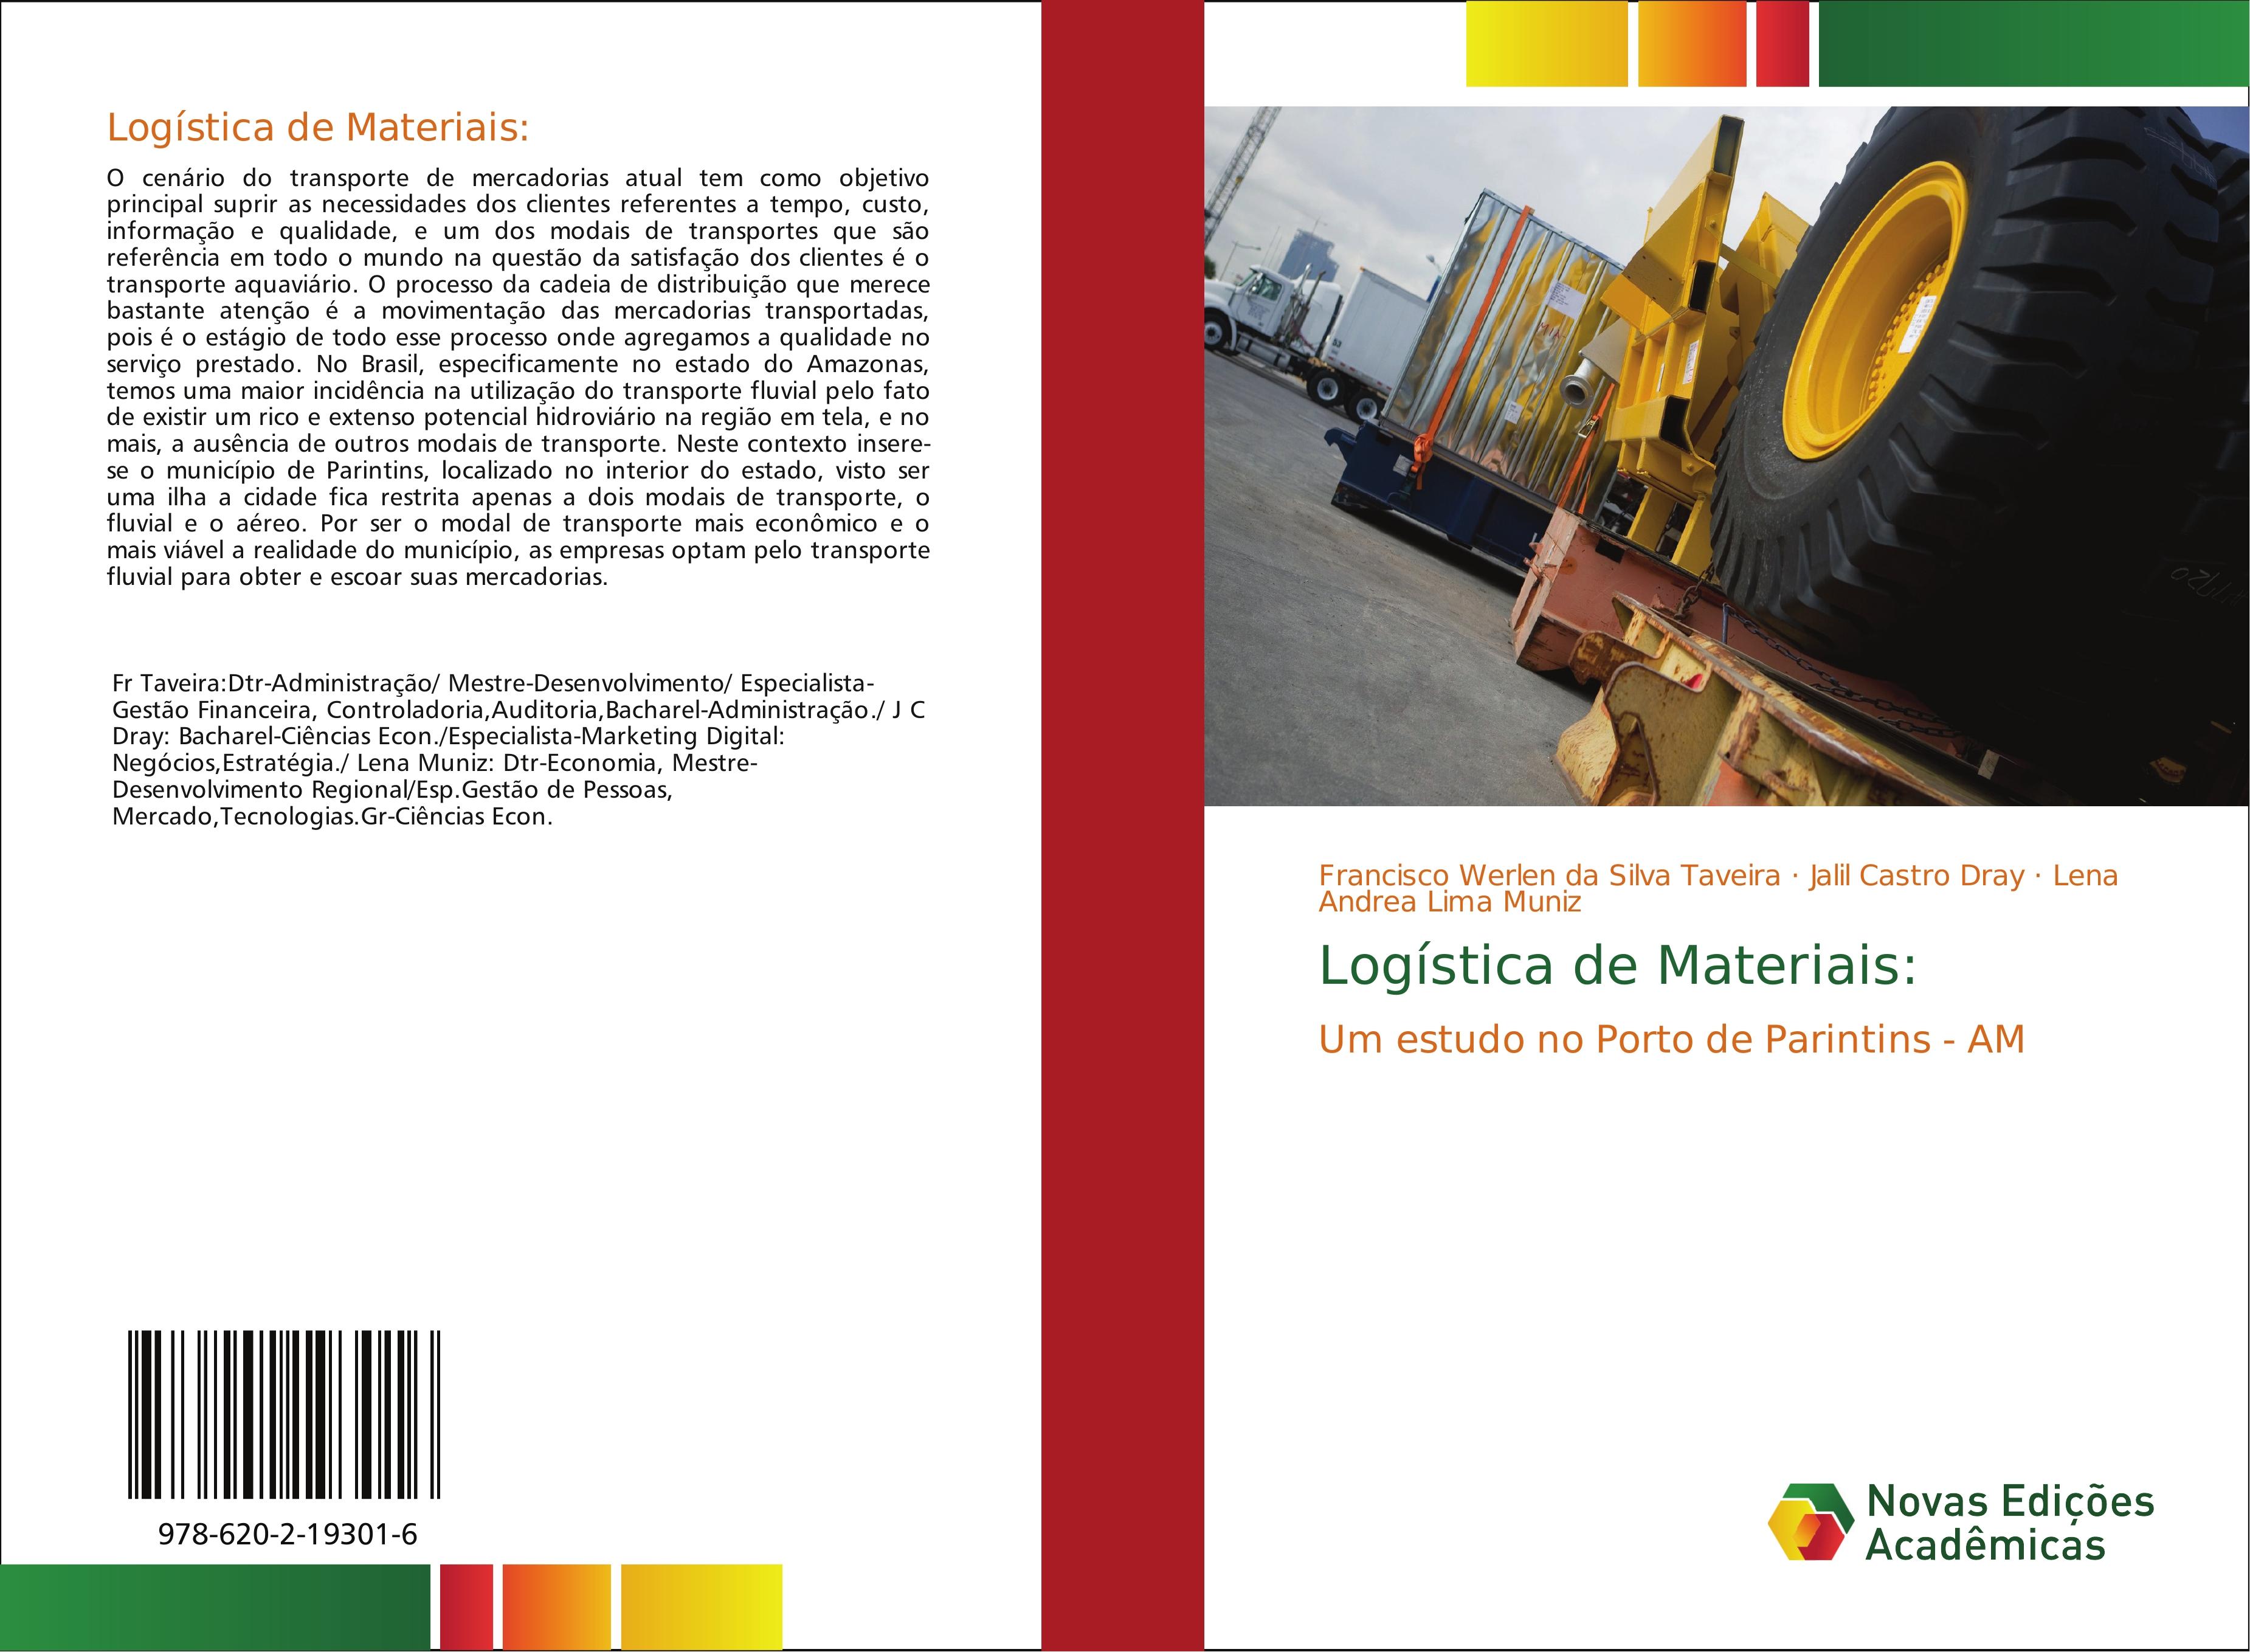 Logística de Materiais - Francisco Werlen da Silva Taveira Jalil Castro Dray Lena Andrea Lima Muniz